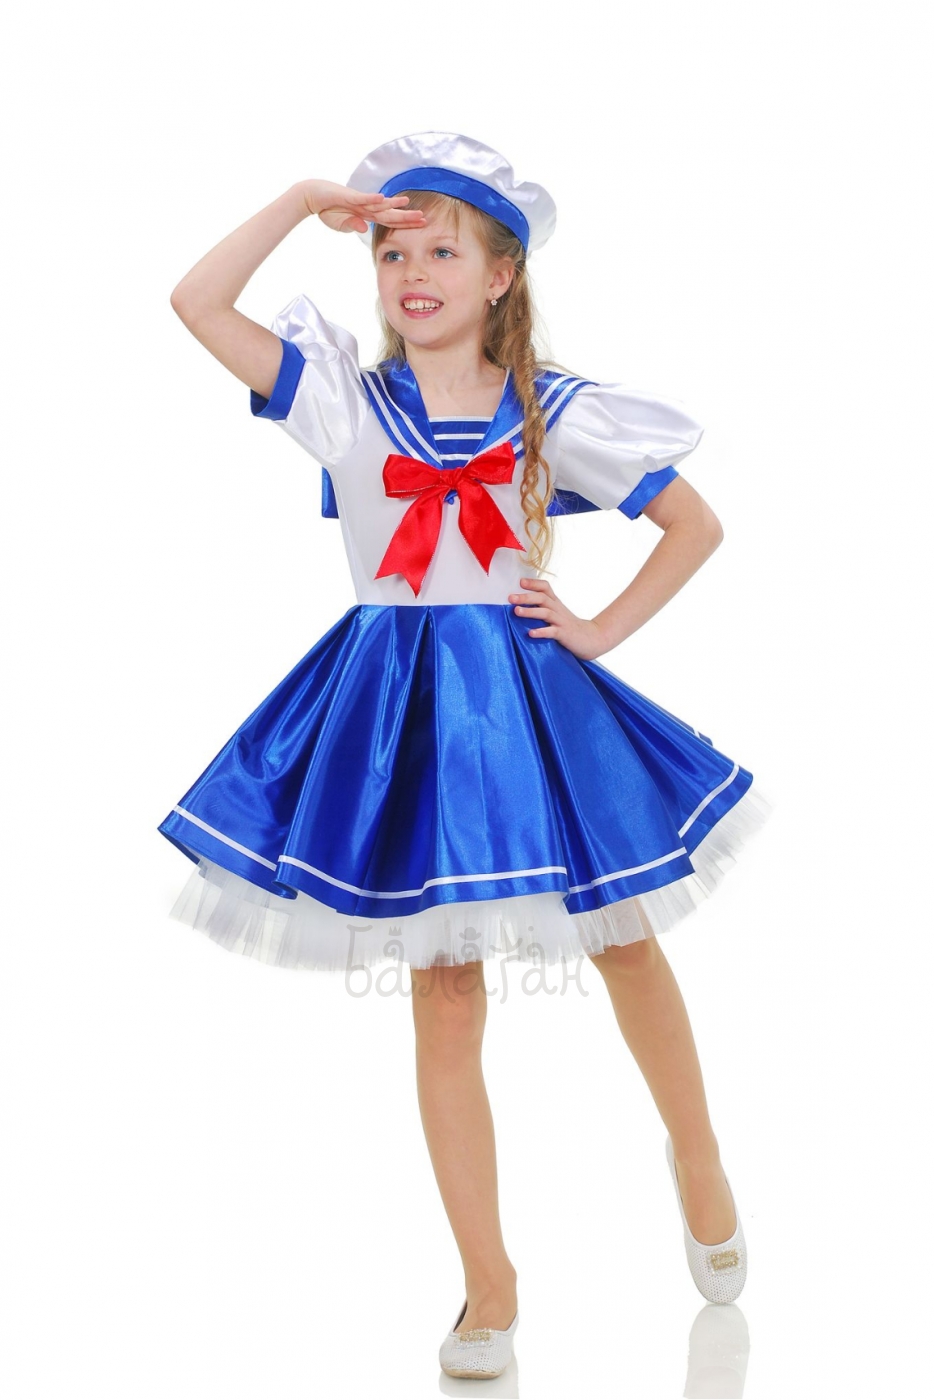 Sea Princess costume for little girl   